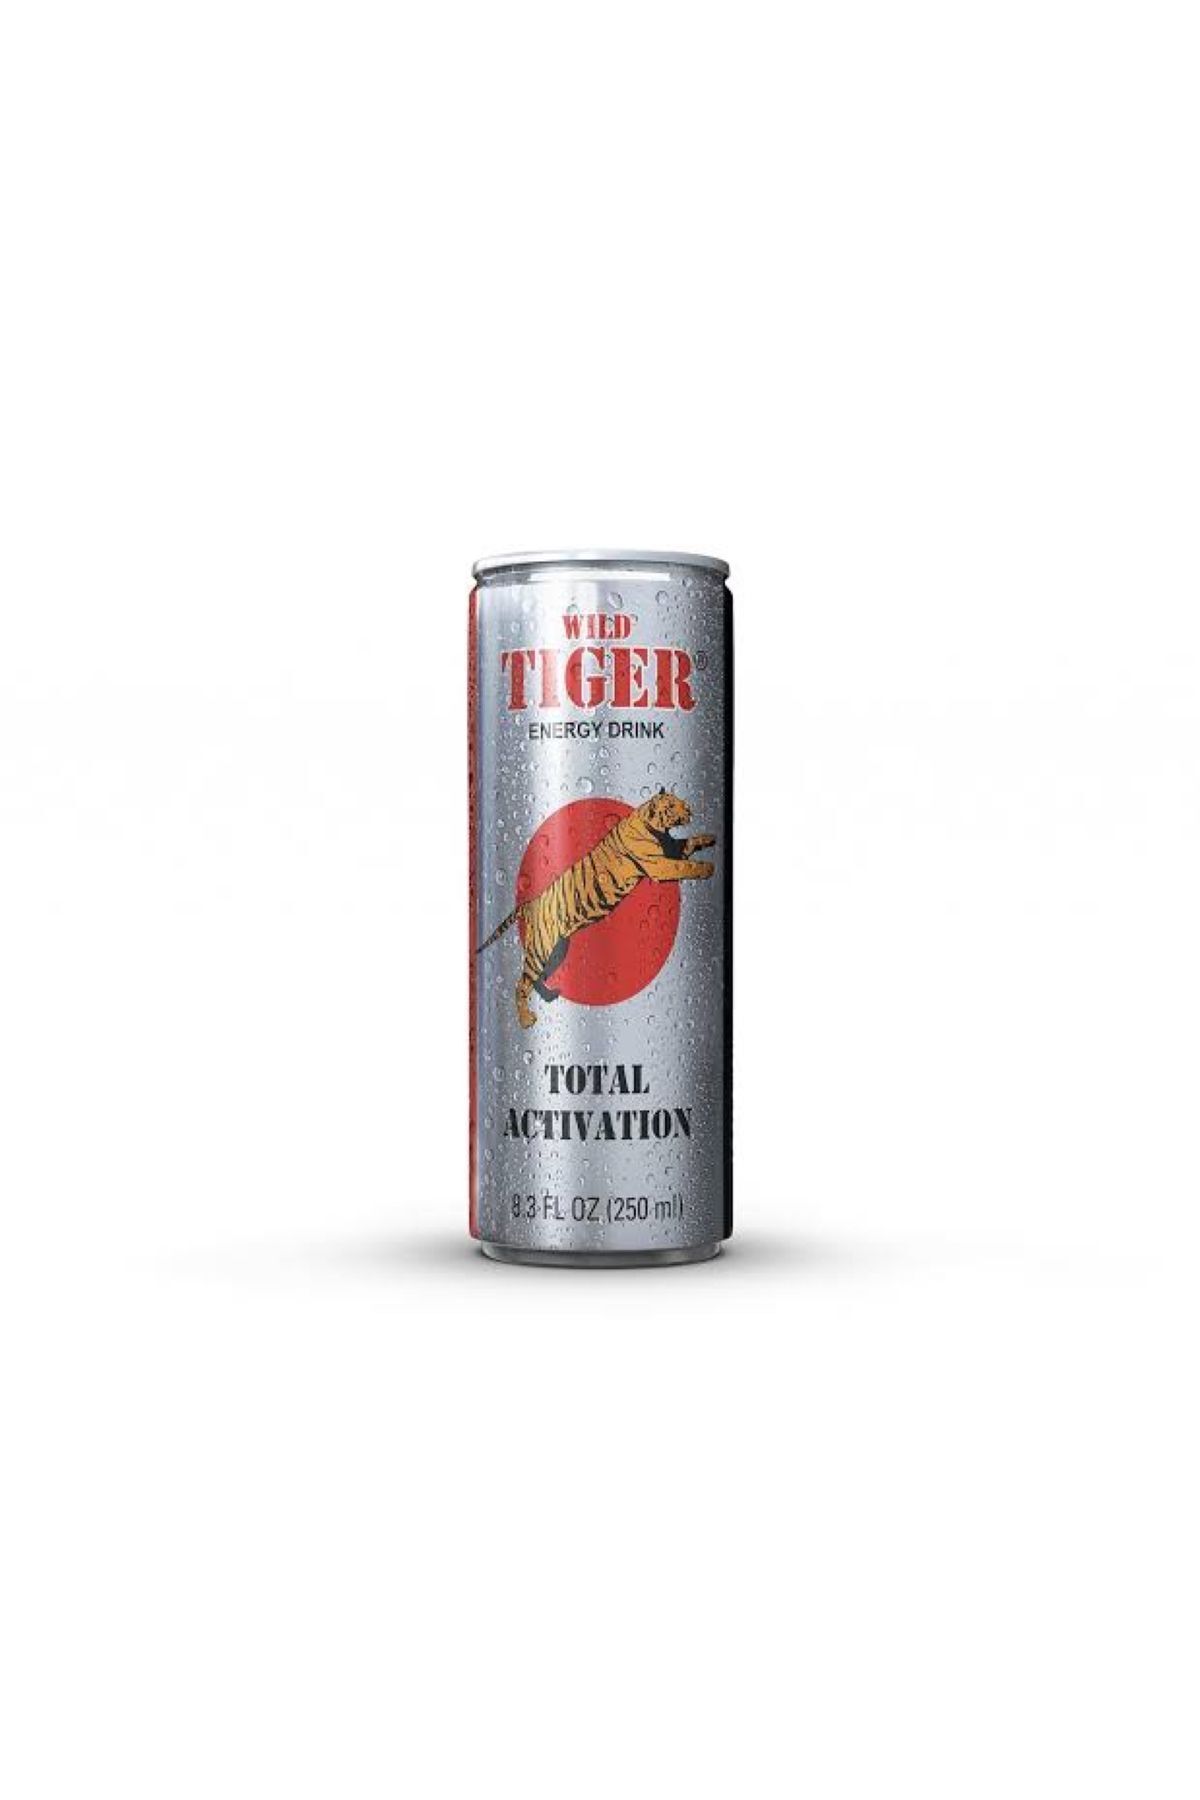 Tiger Wild Tiger Energy Drink 8.3 fl. oz 250ml